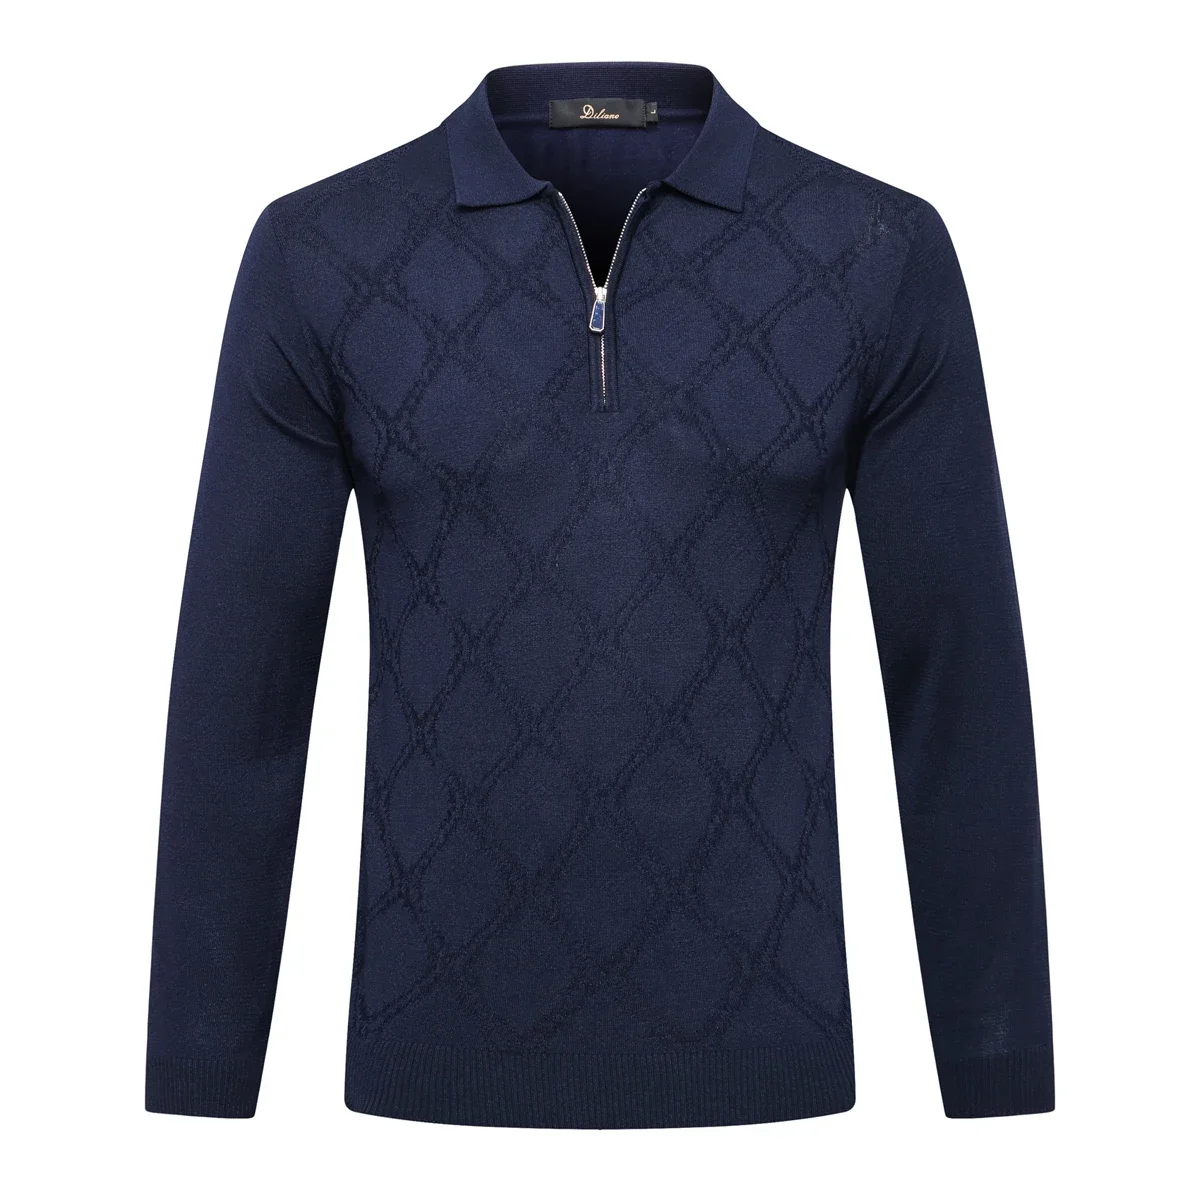 

OECHSLI Sweater Wool 2025 New Men's Long Sleeve fashion Breathable diamond pattern Wrinkle Resistant Suitable BIg size M-5XL